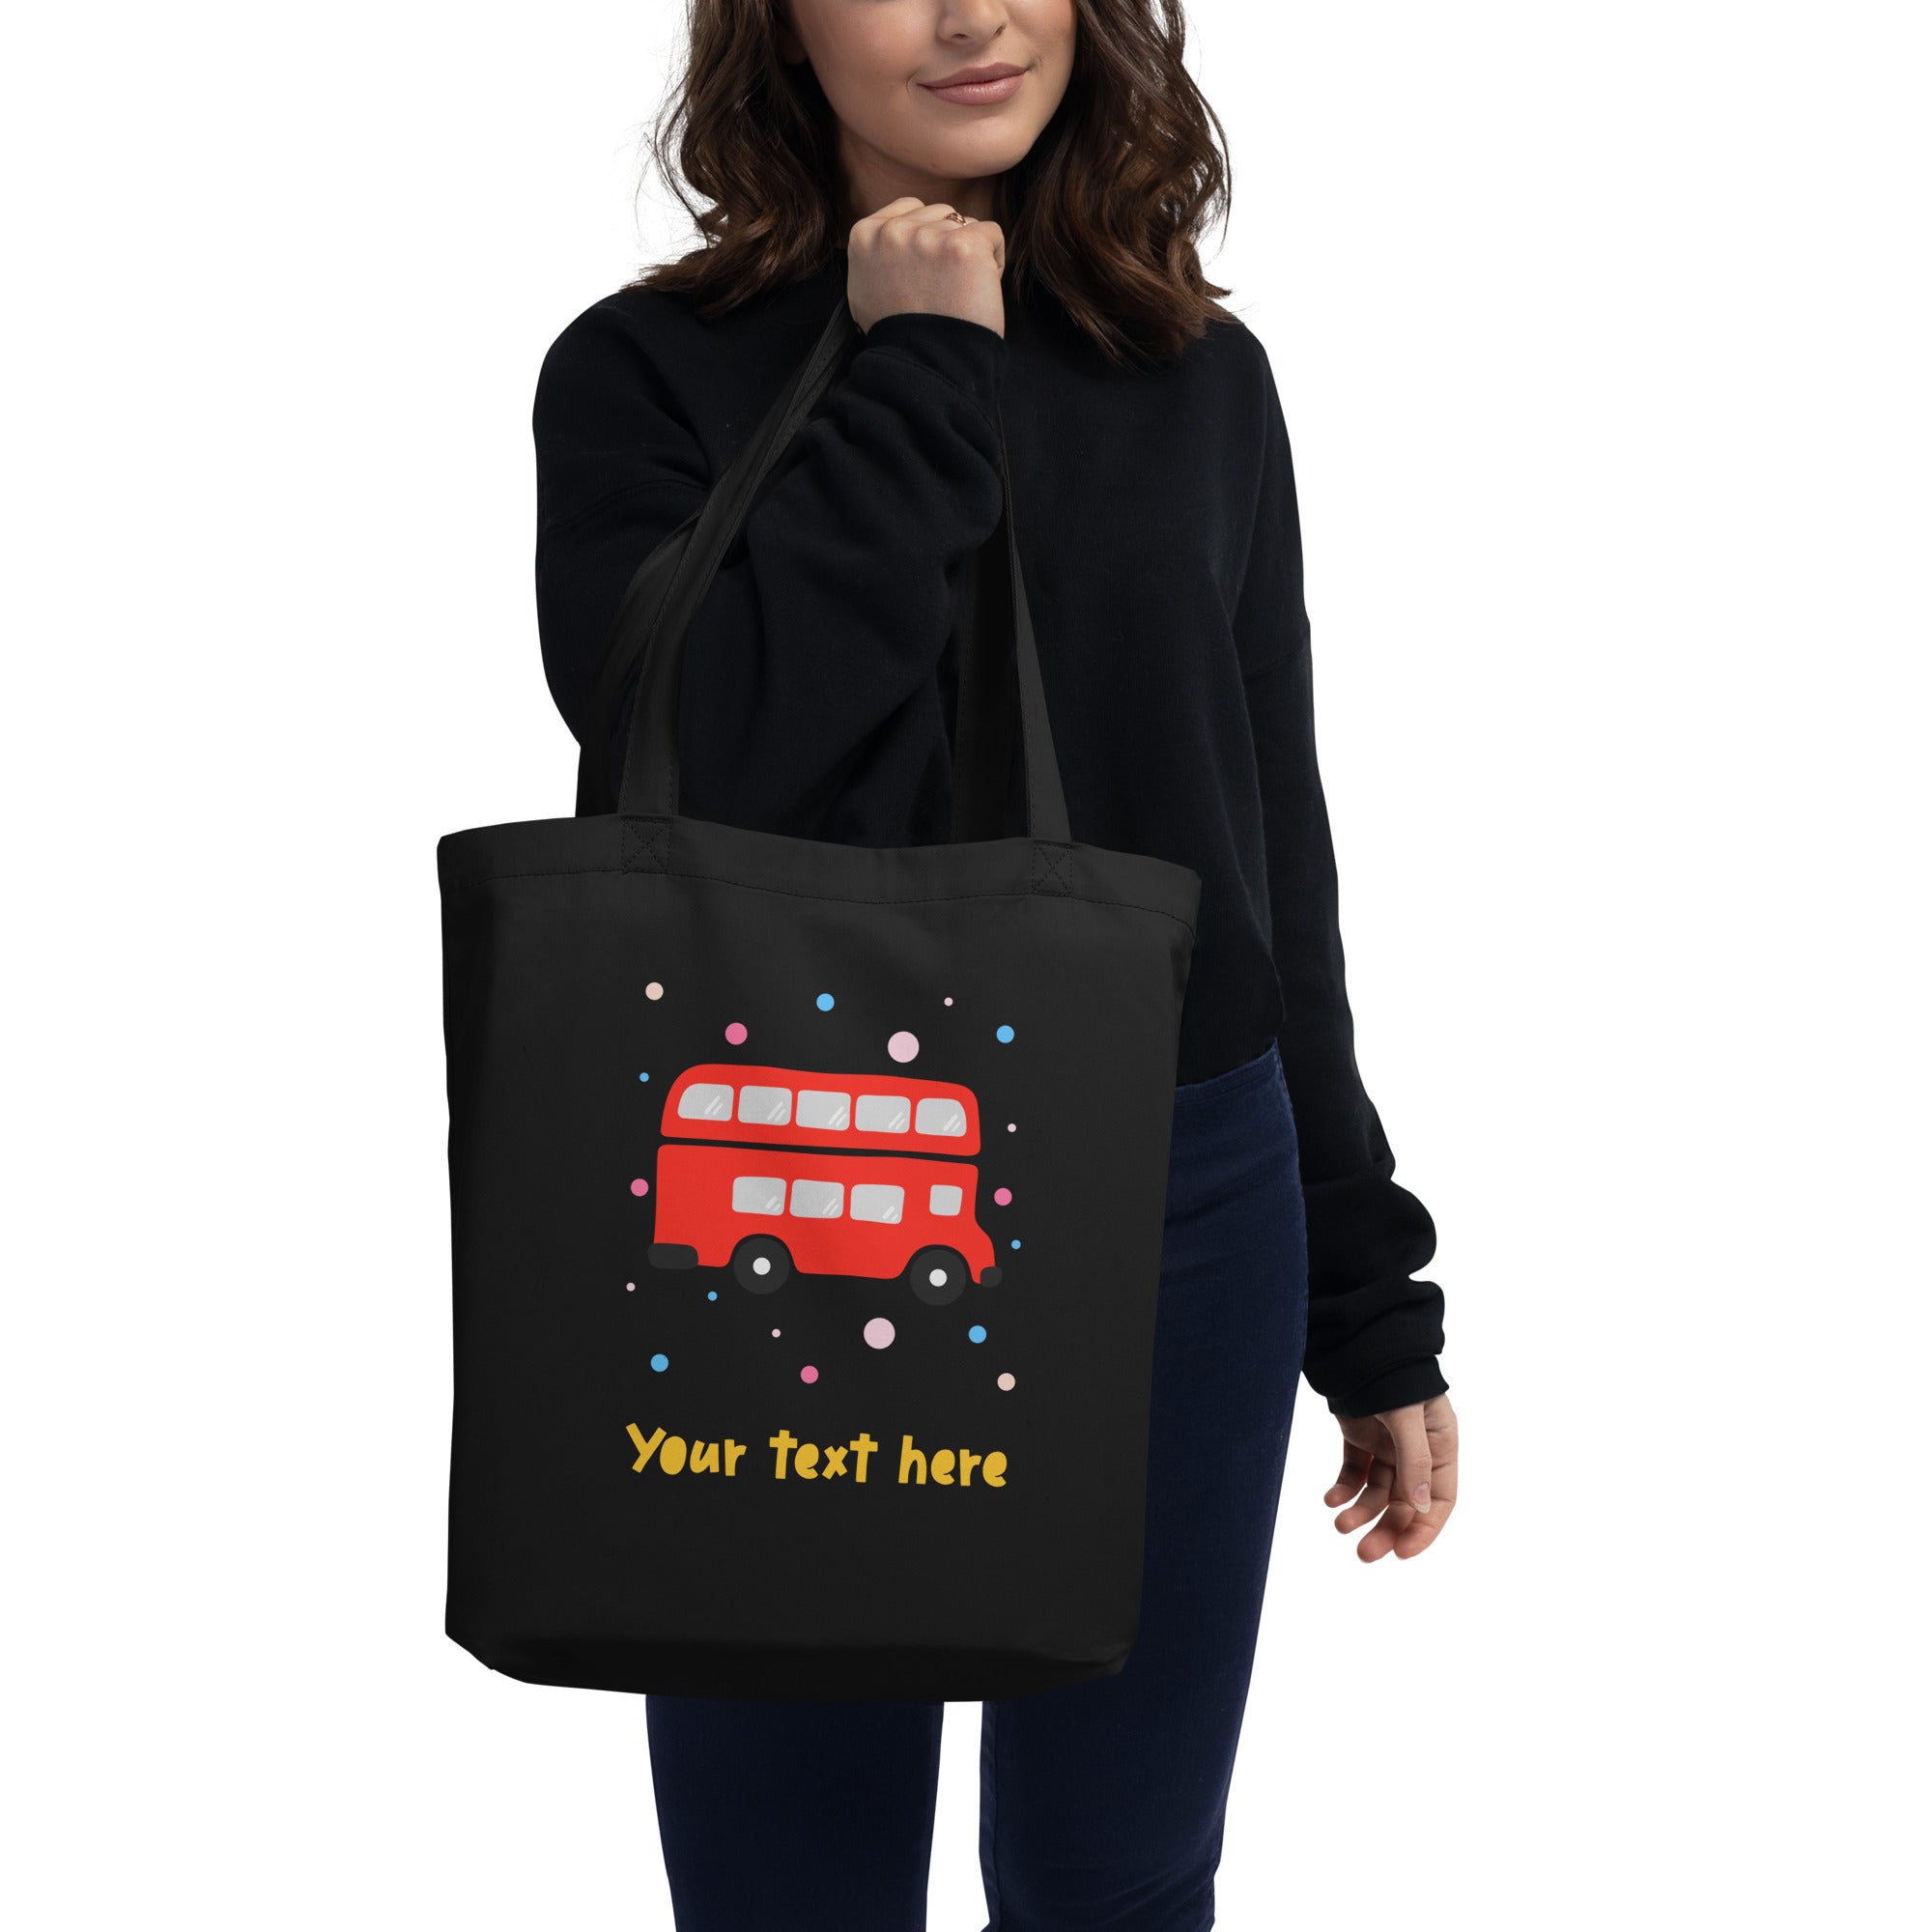 Personalised Custom Text - Eco Tote Bag - London Doodles - Bus